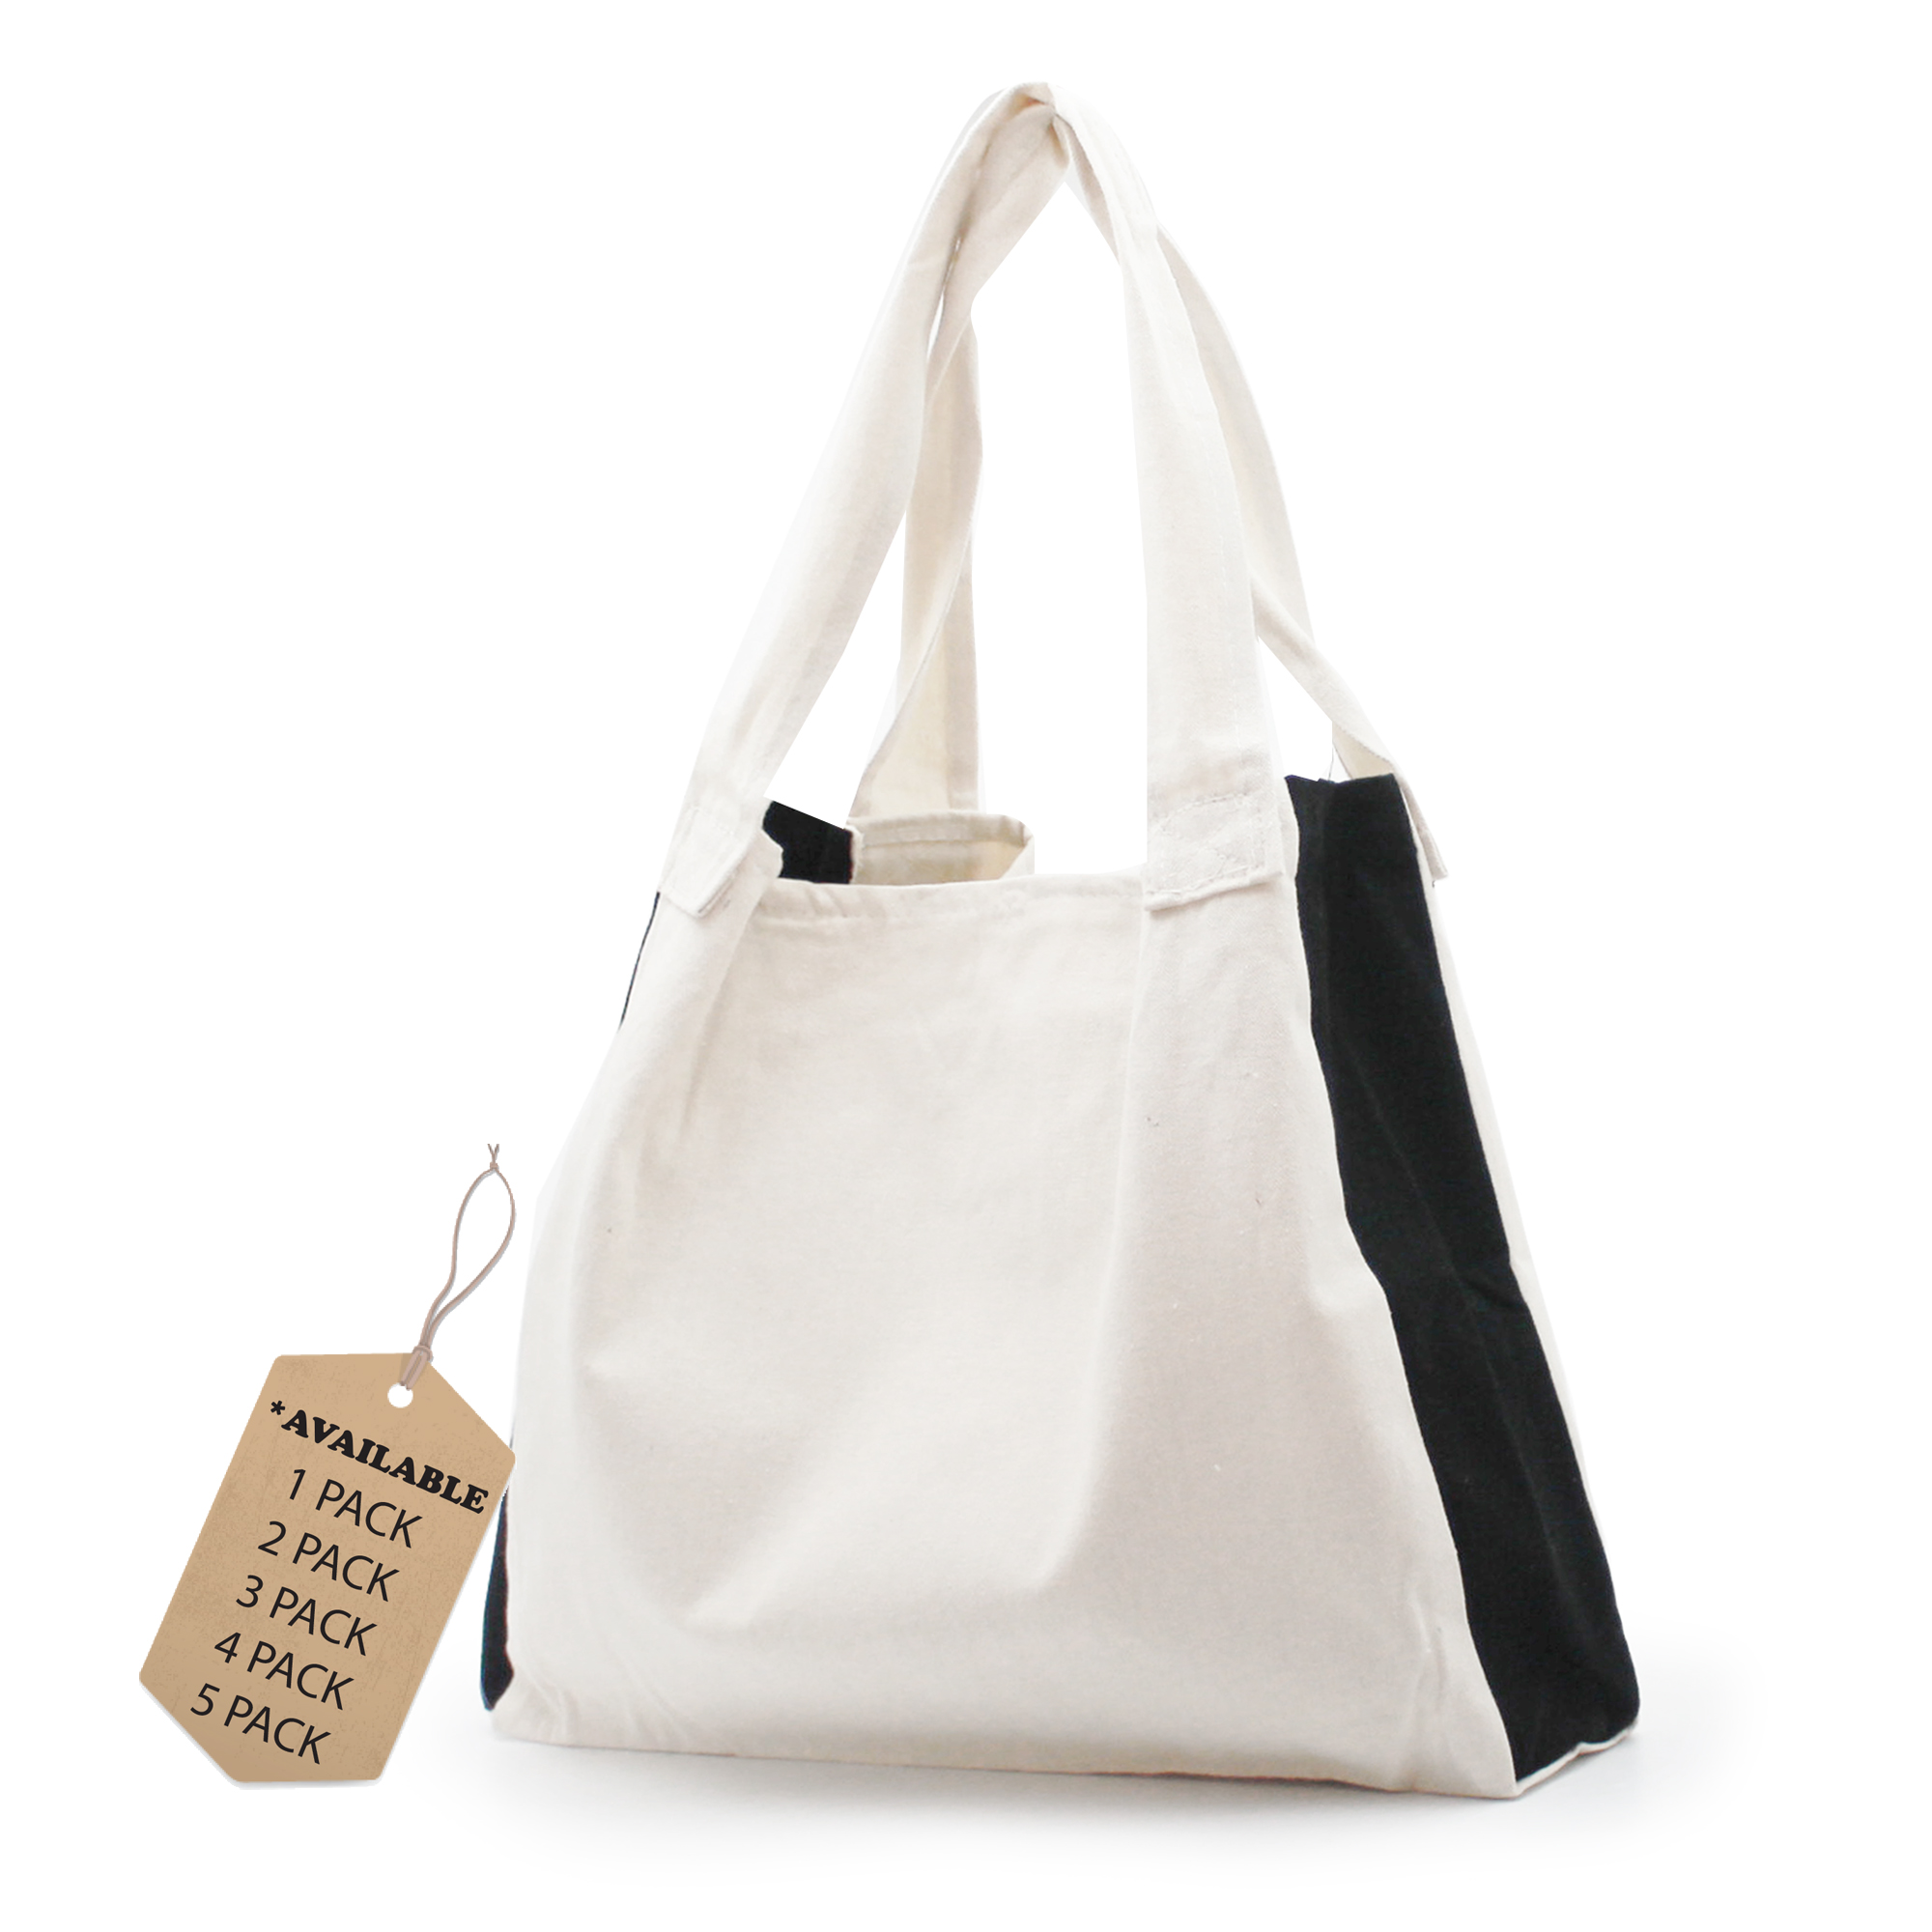 EcoJeannie (2 Bags) 100% Cotton Canvas Reusable Tote Bag w/Inner Pocket, Gusset and Closure Strips, Multi Use bag, Shoulder Bag, Travel Tote, Picnic Bag, 24-7 Bag, School Bag - image 1 of 4